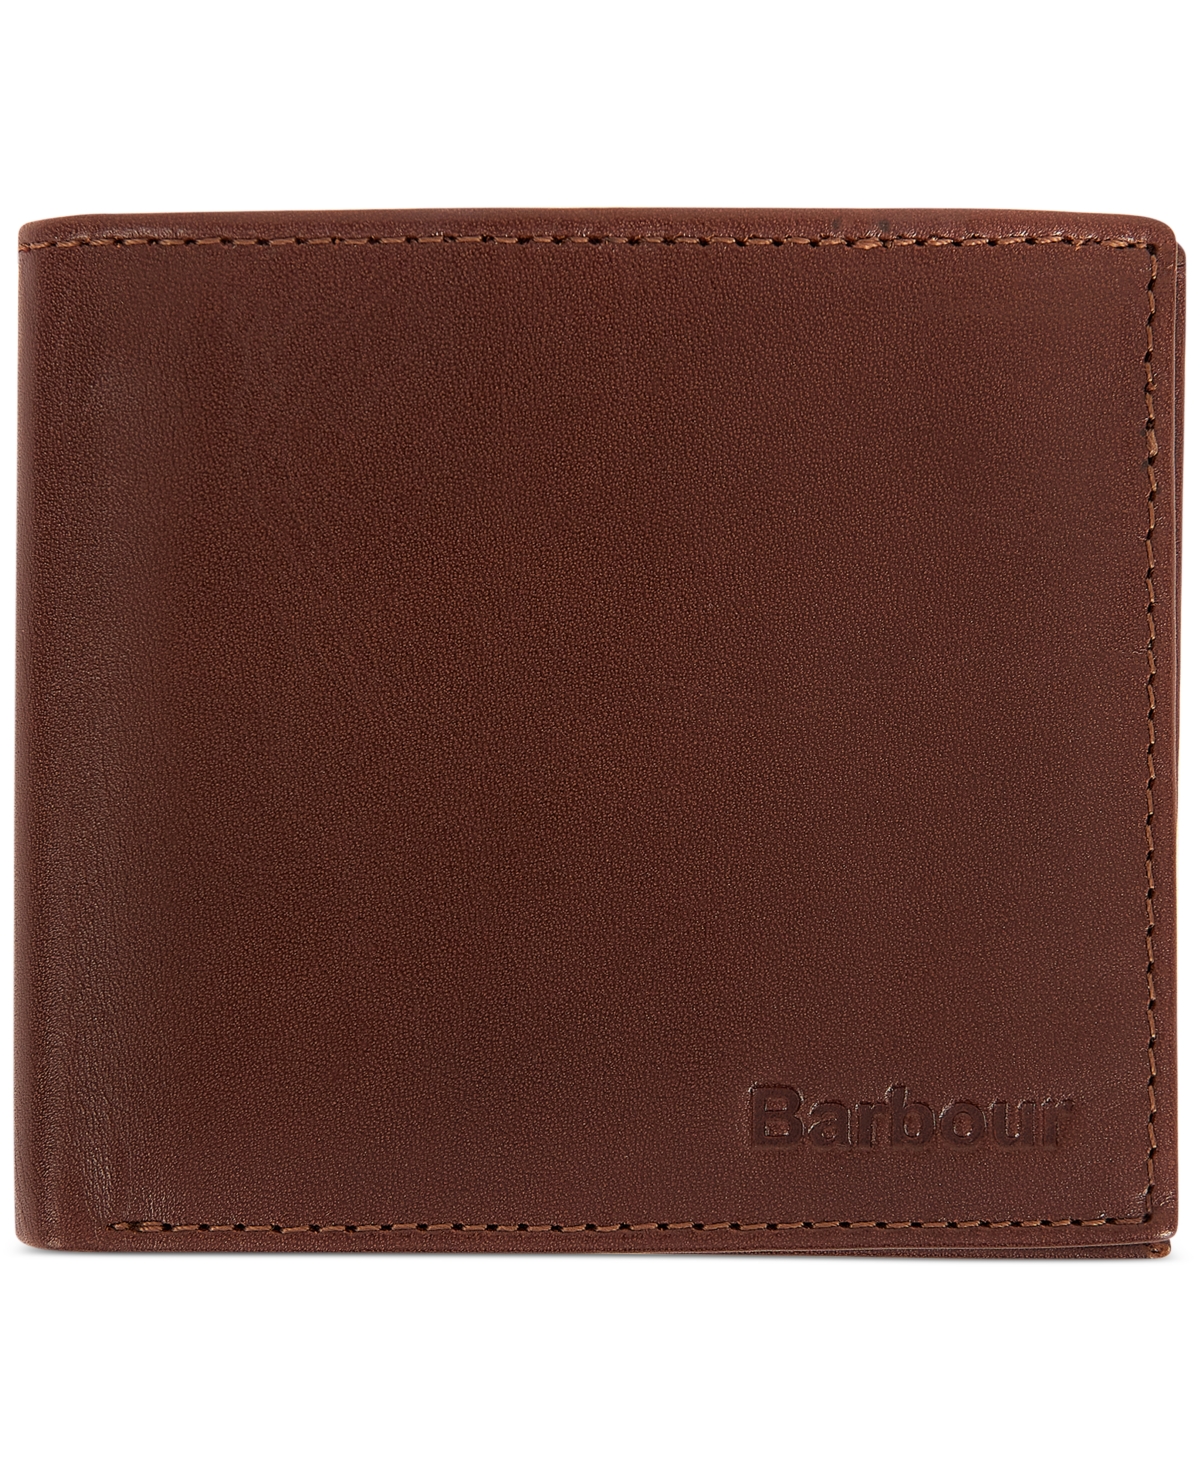 Men's Colwell Slimline Leather Billfold Wallet - Brown/clas